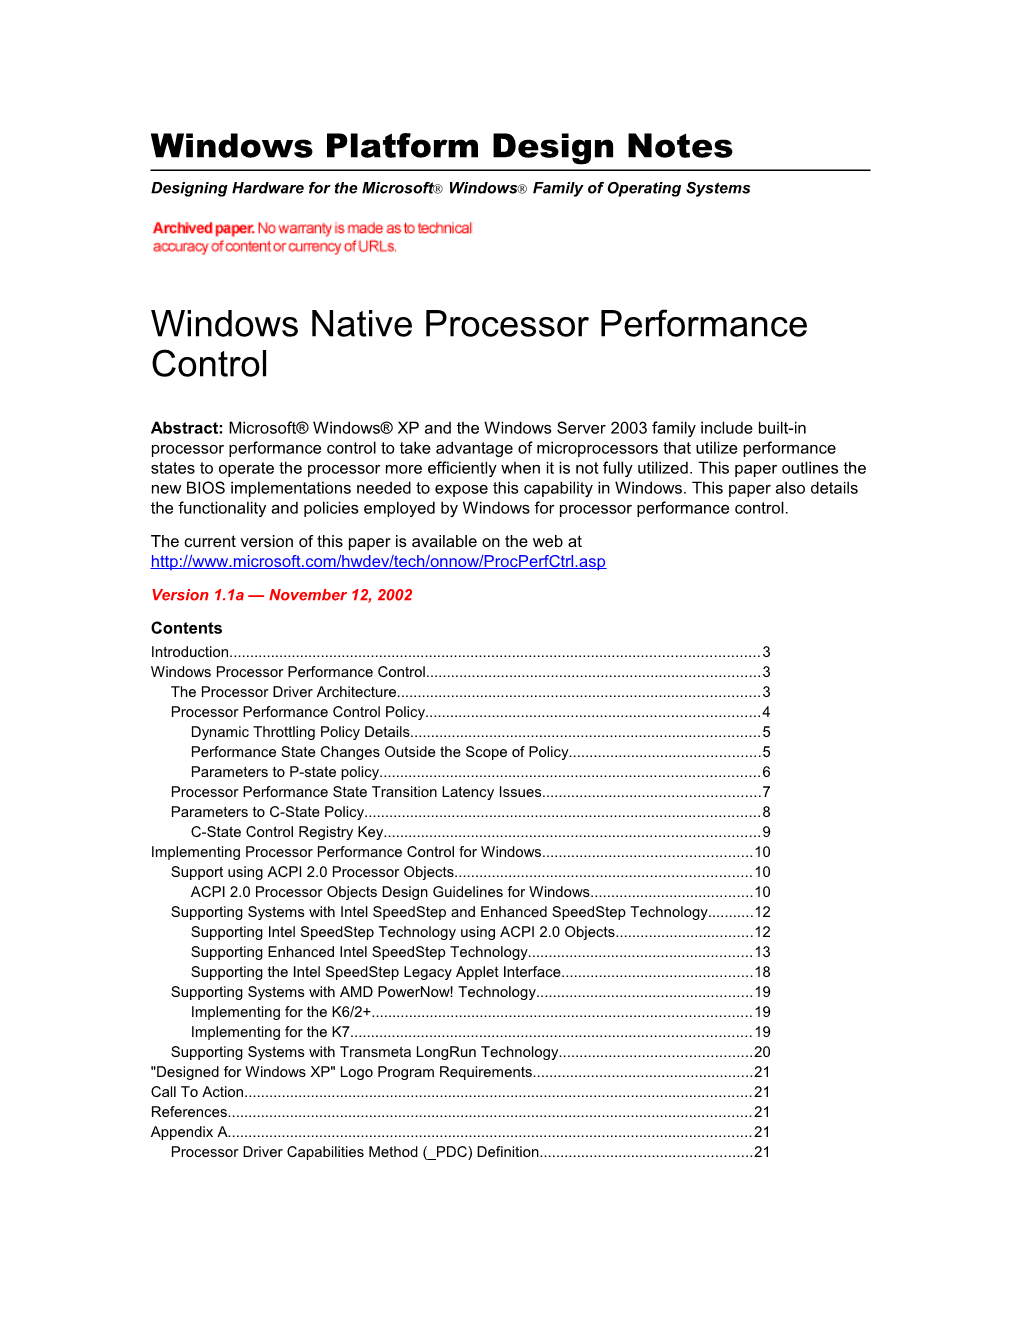 Windows Native Processor Performance Control